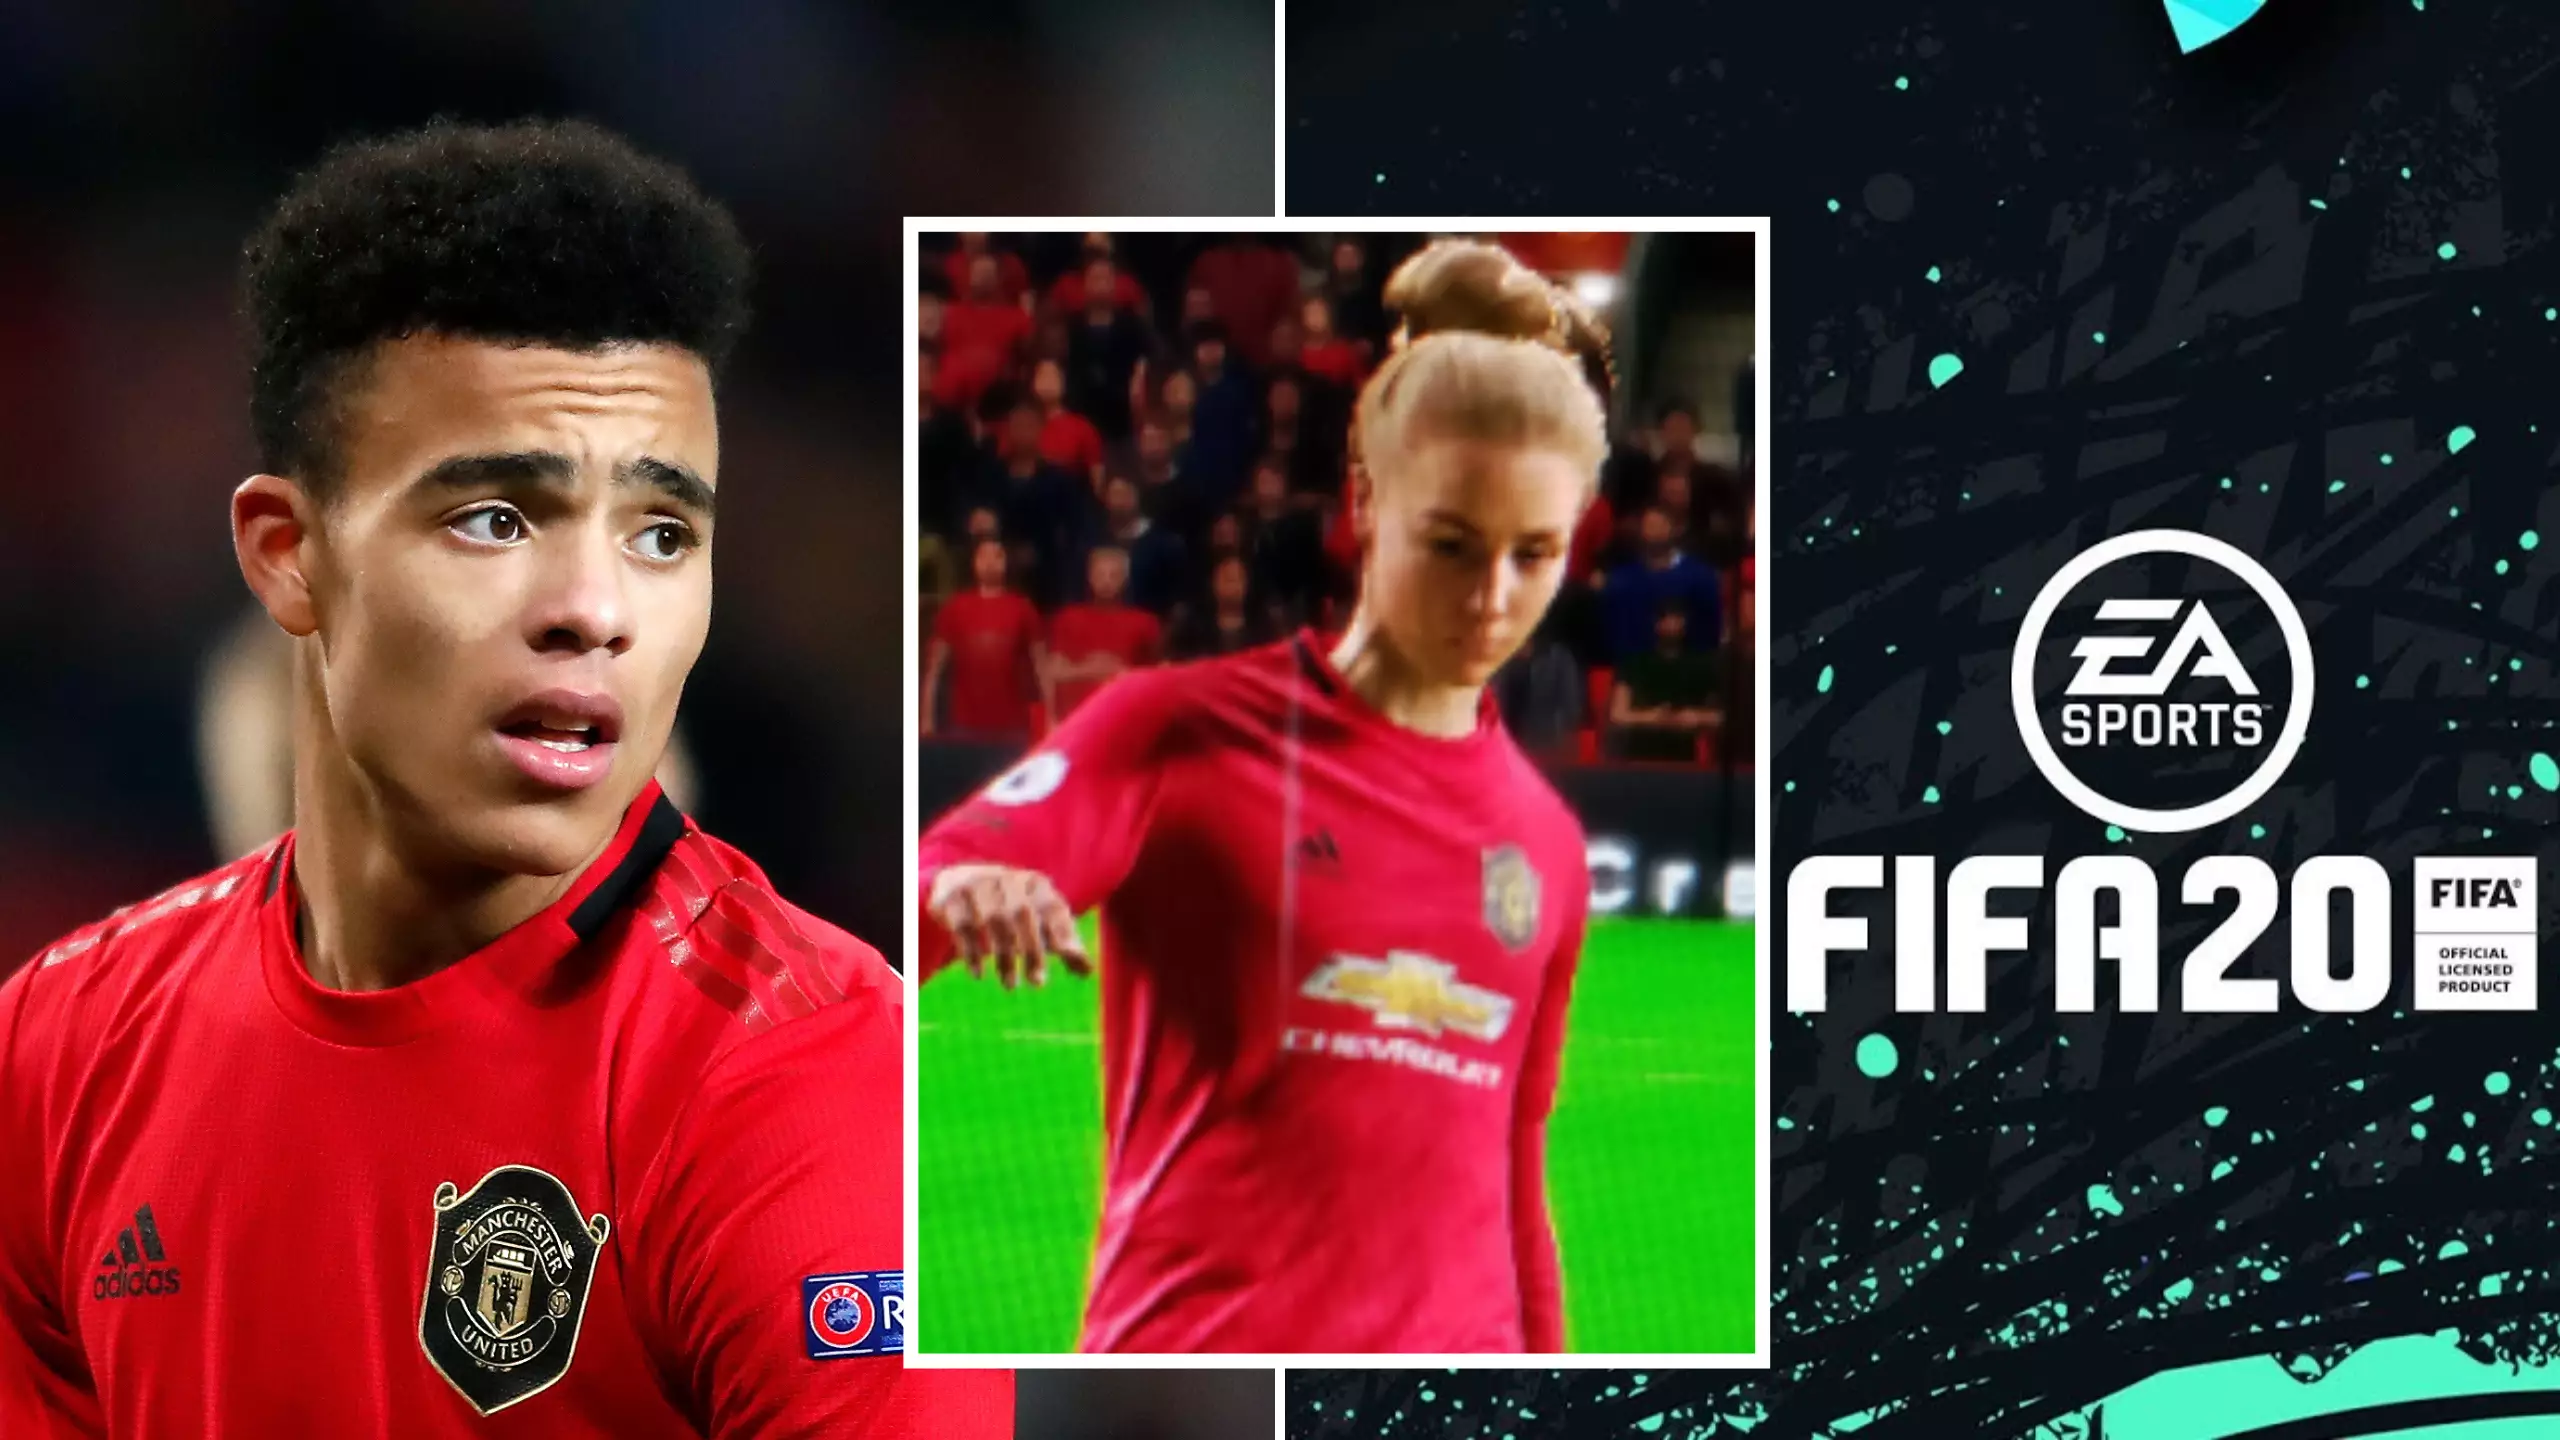 FIFA 20 Glitch Bizarrely Transforms Manchester United's Mason Greenwood Into A Woman